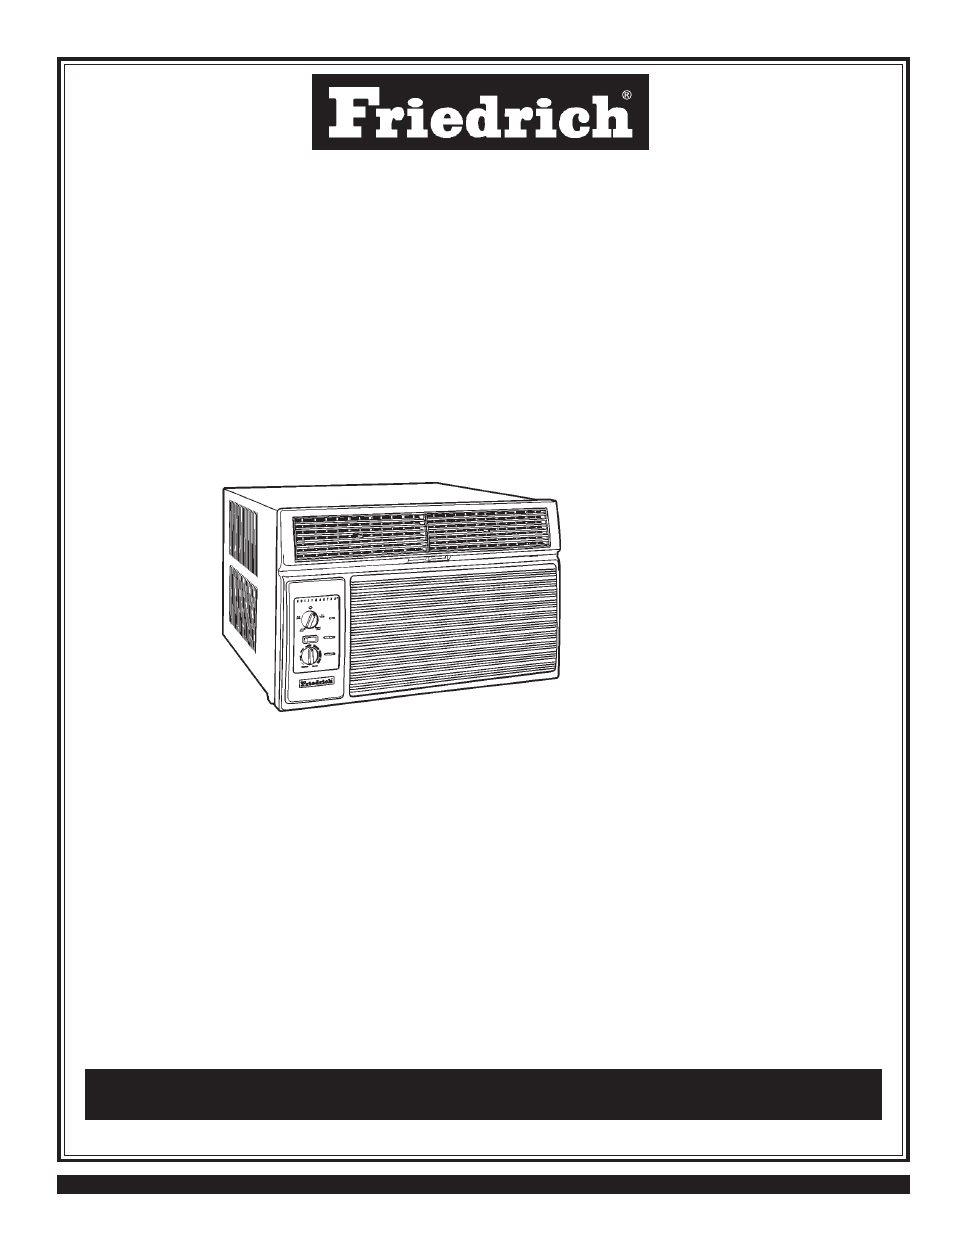 Friedrich Room Air Conditioner User Manual Lgmk01086